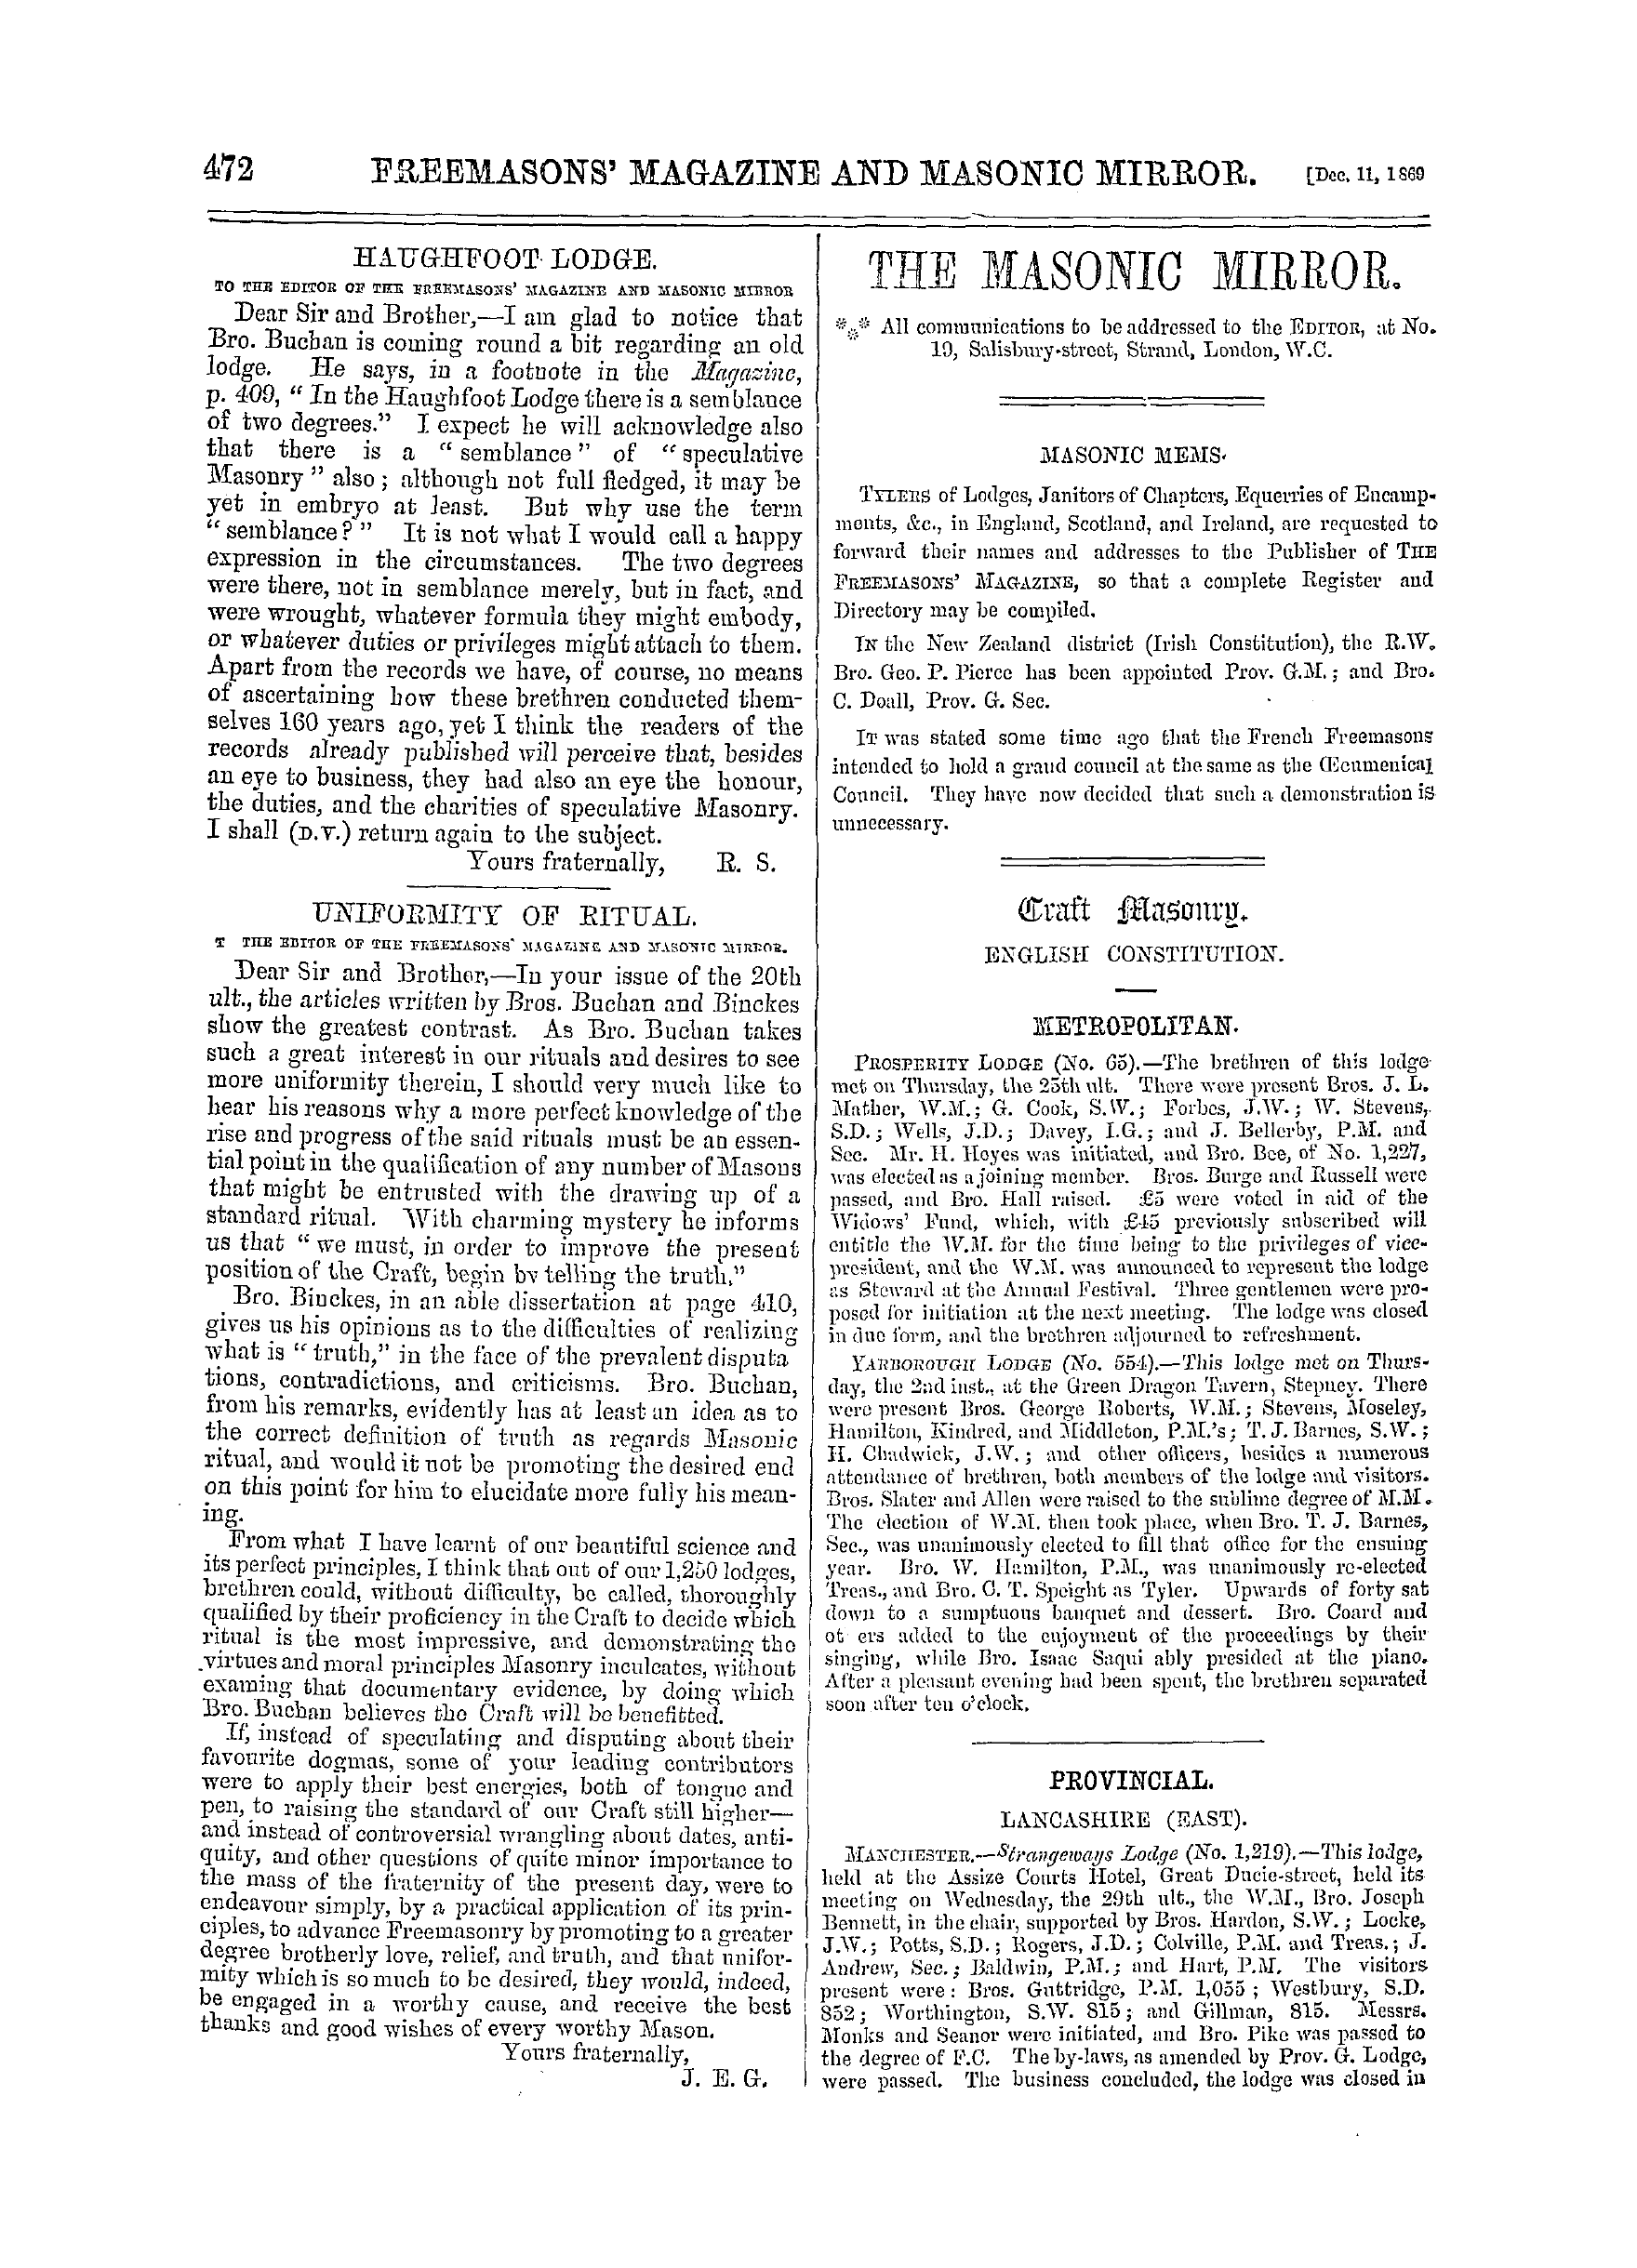 The Freemasons' Monthly Magazine: 1869-12-11 - Uniformity Of Ritual.